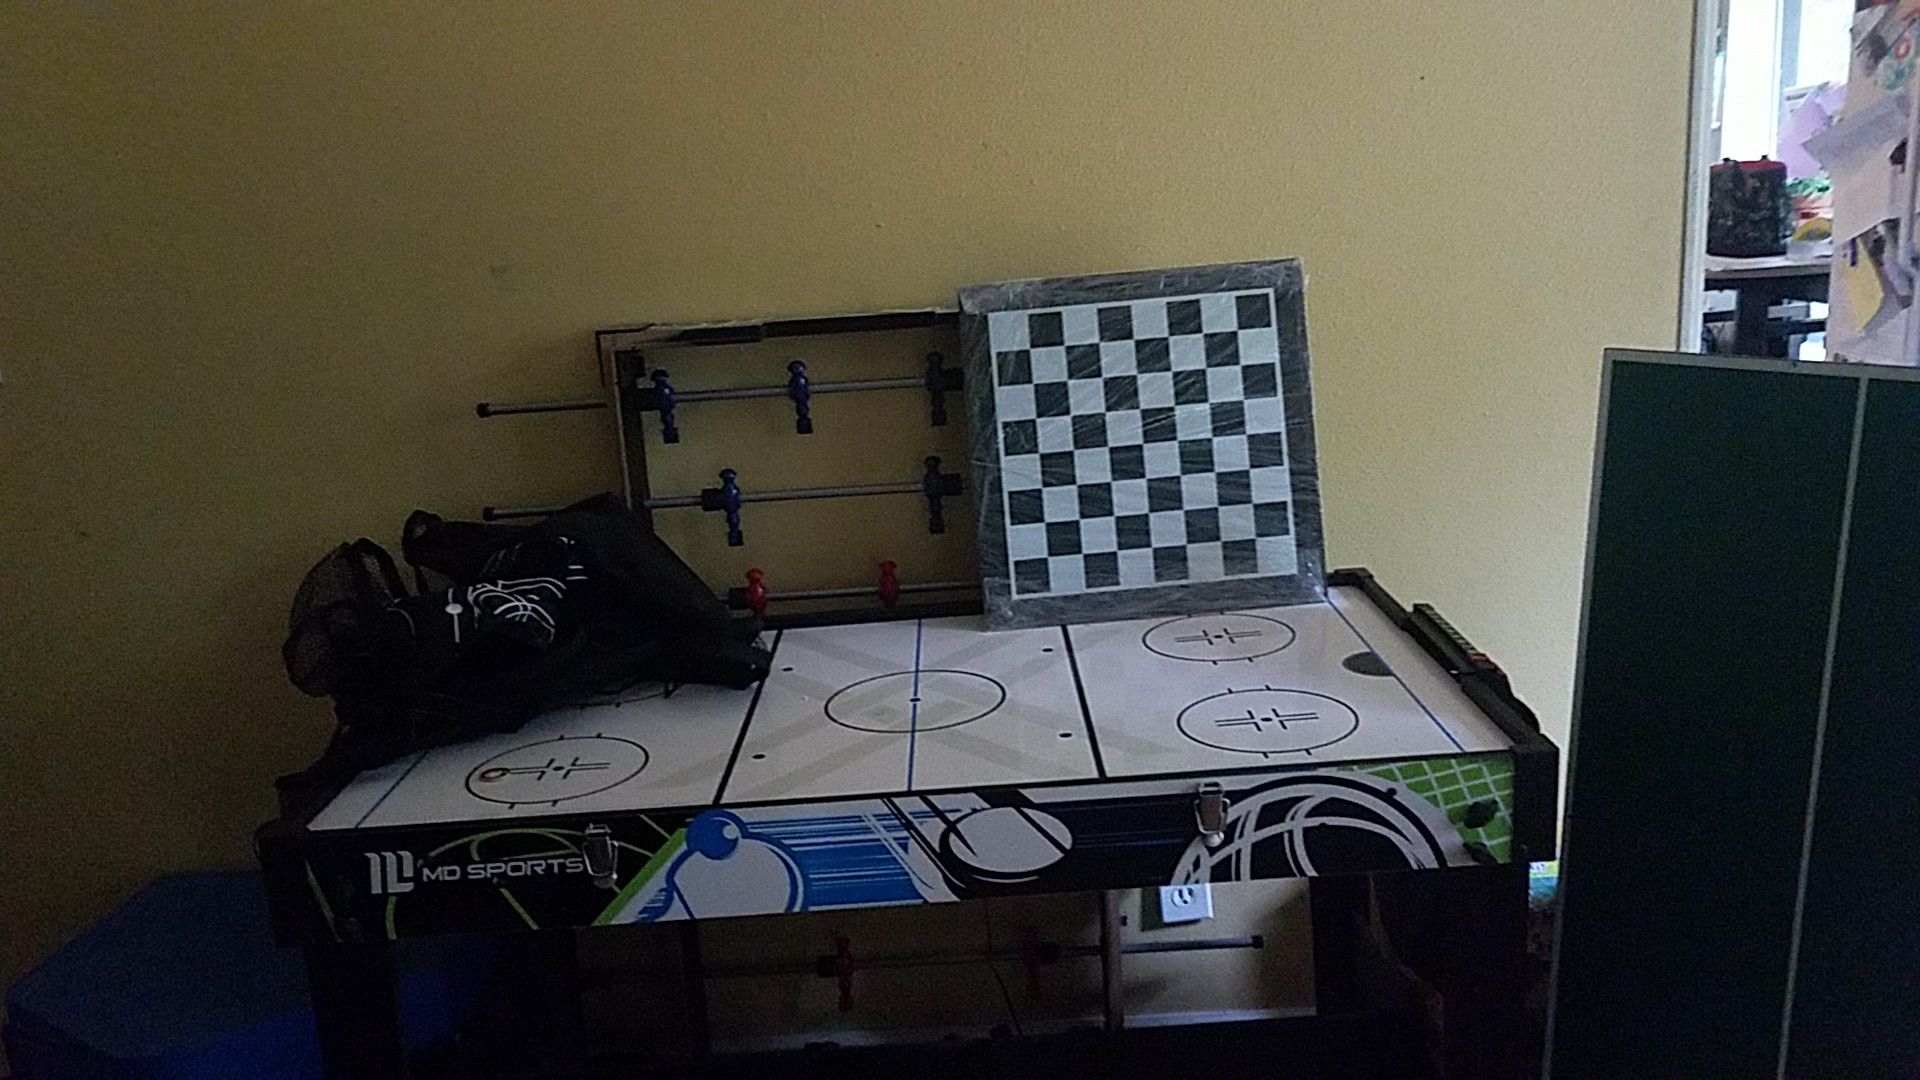 Electronic air hockey, foosball, pingpong, and basketball table.